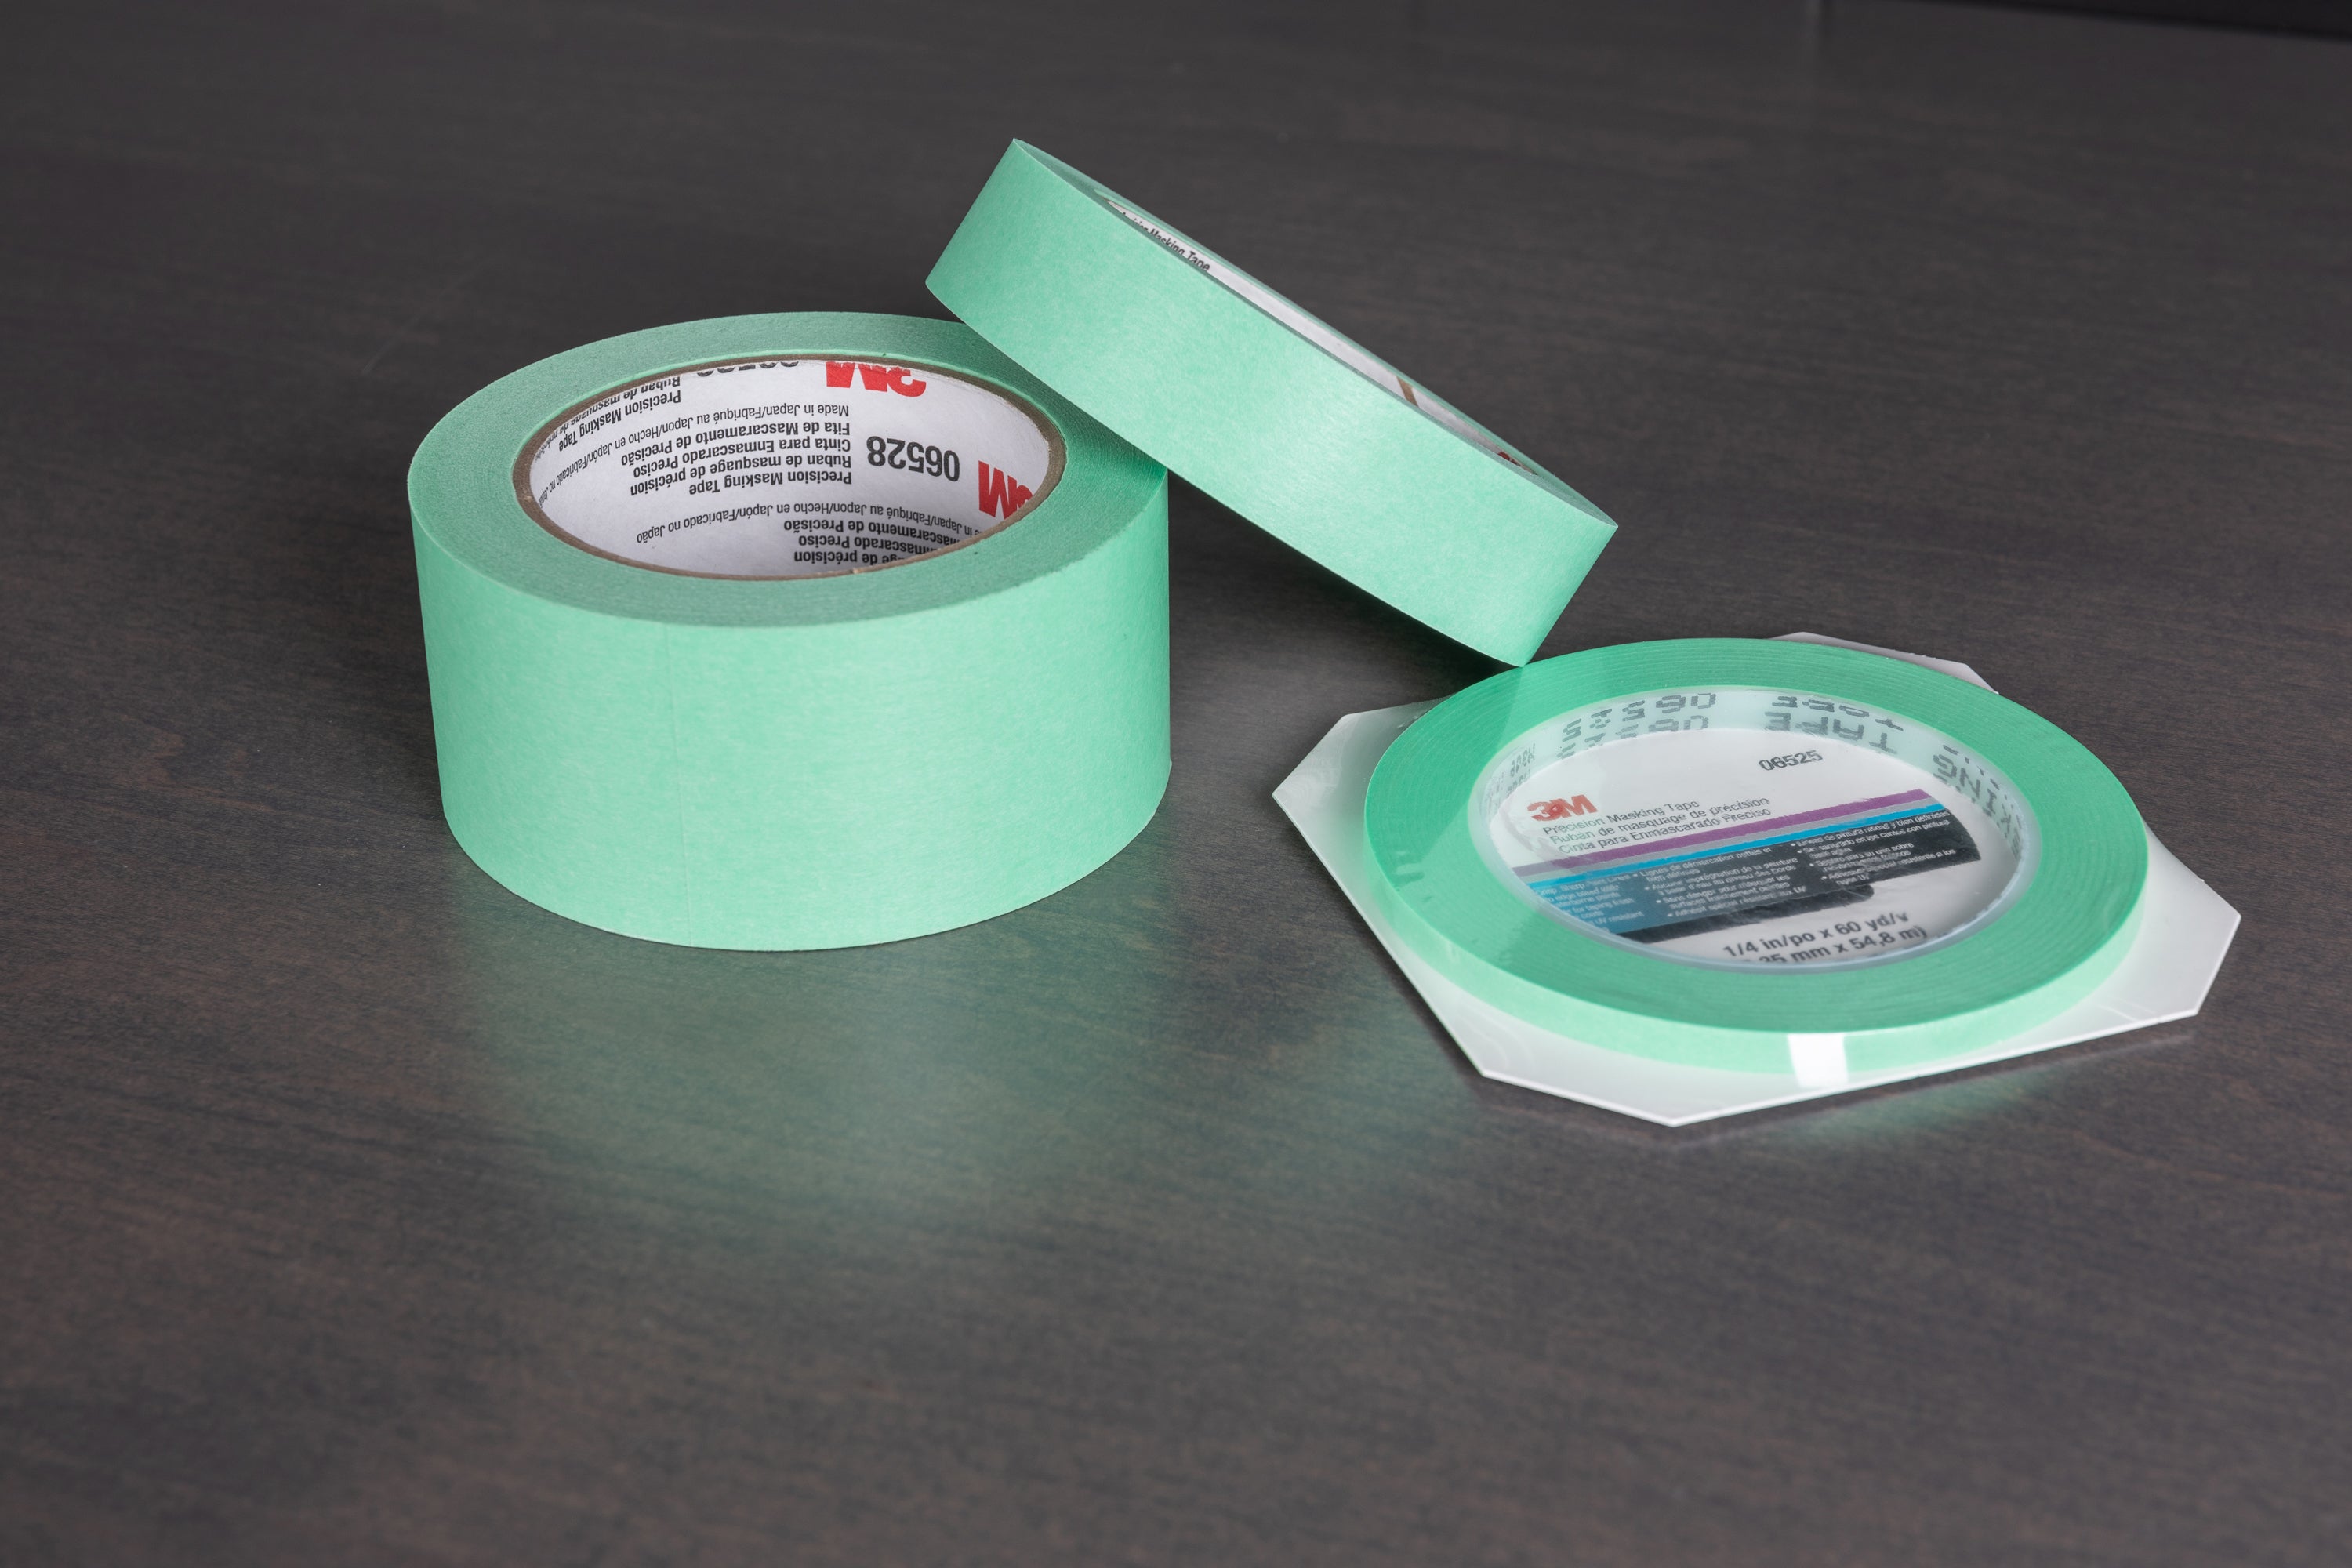 CarPro Automotive Masking Tape - 5 mm CPMT5